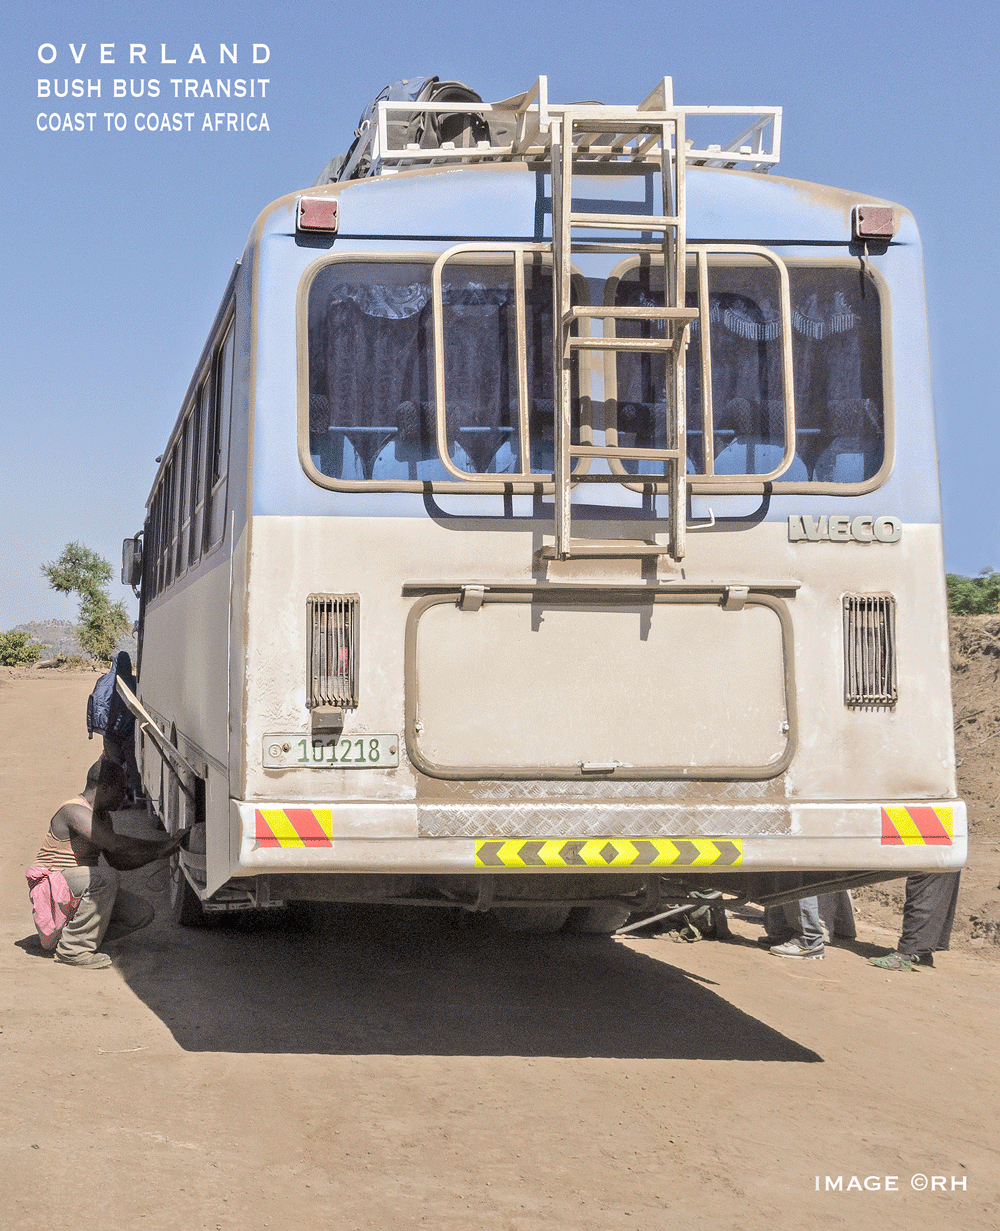 overland Africa, bush bus transport, image snap by Rick Hemi